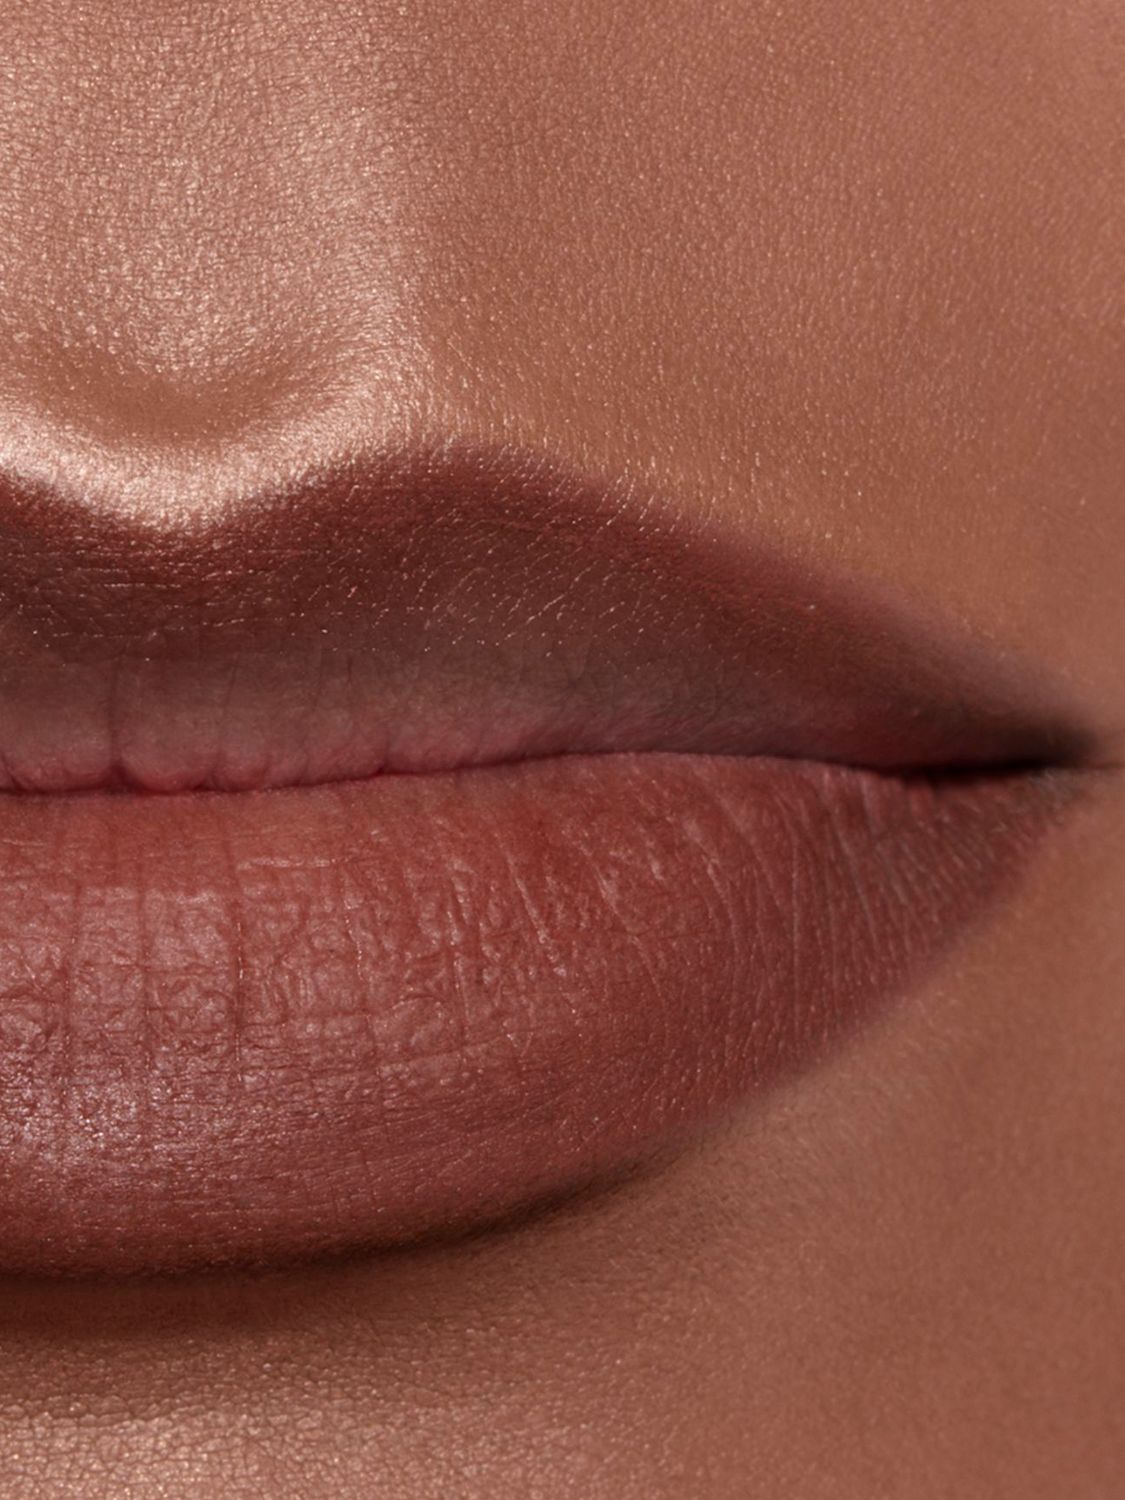 Lip Liner - Makeup